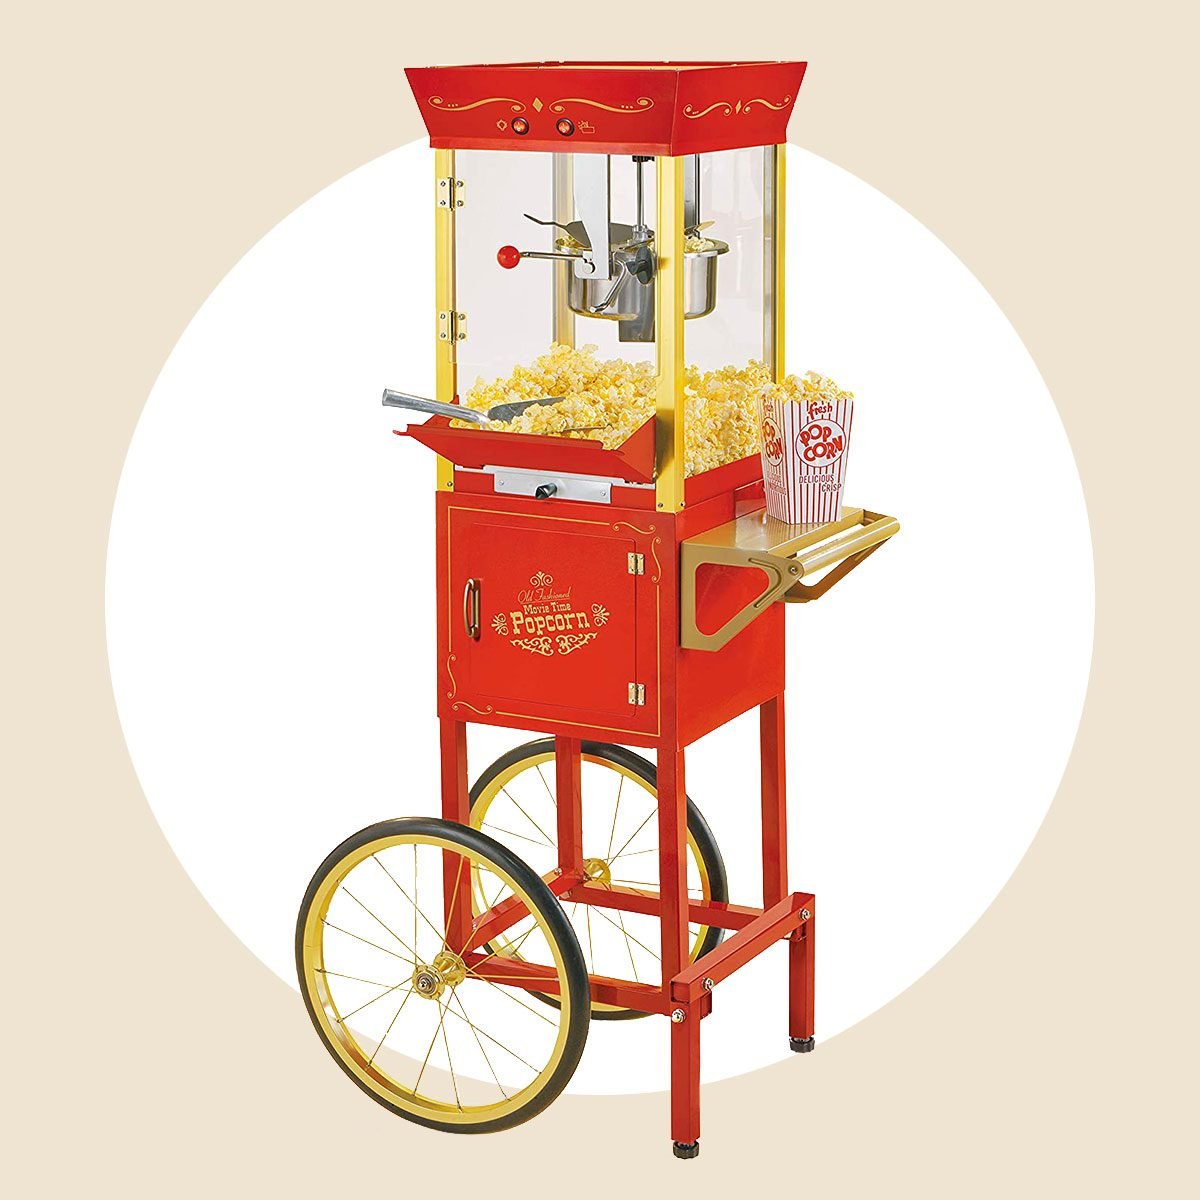 Toh Ecomm Popcorn Machine Via Amazon.com